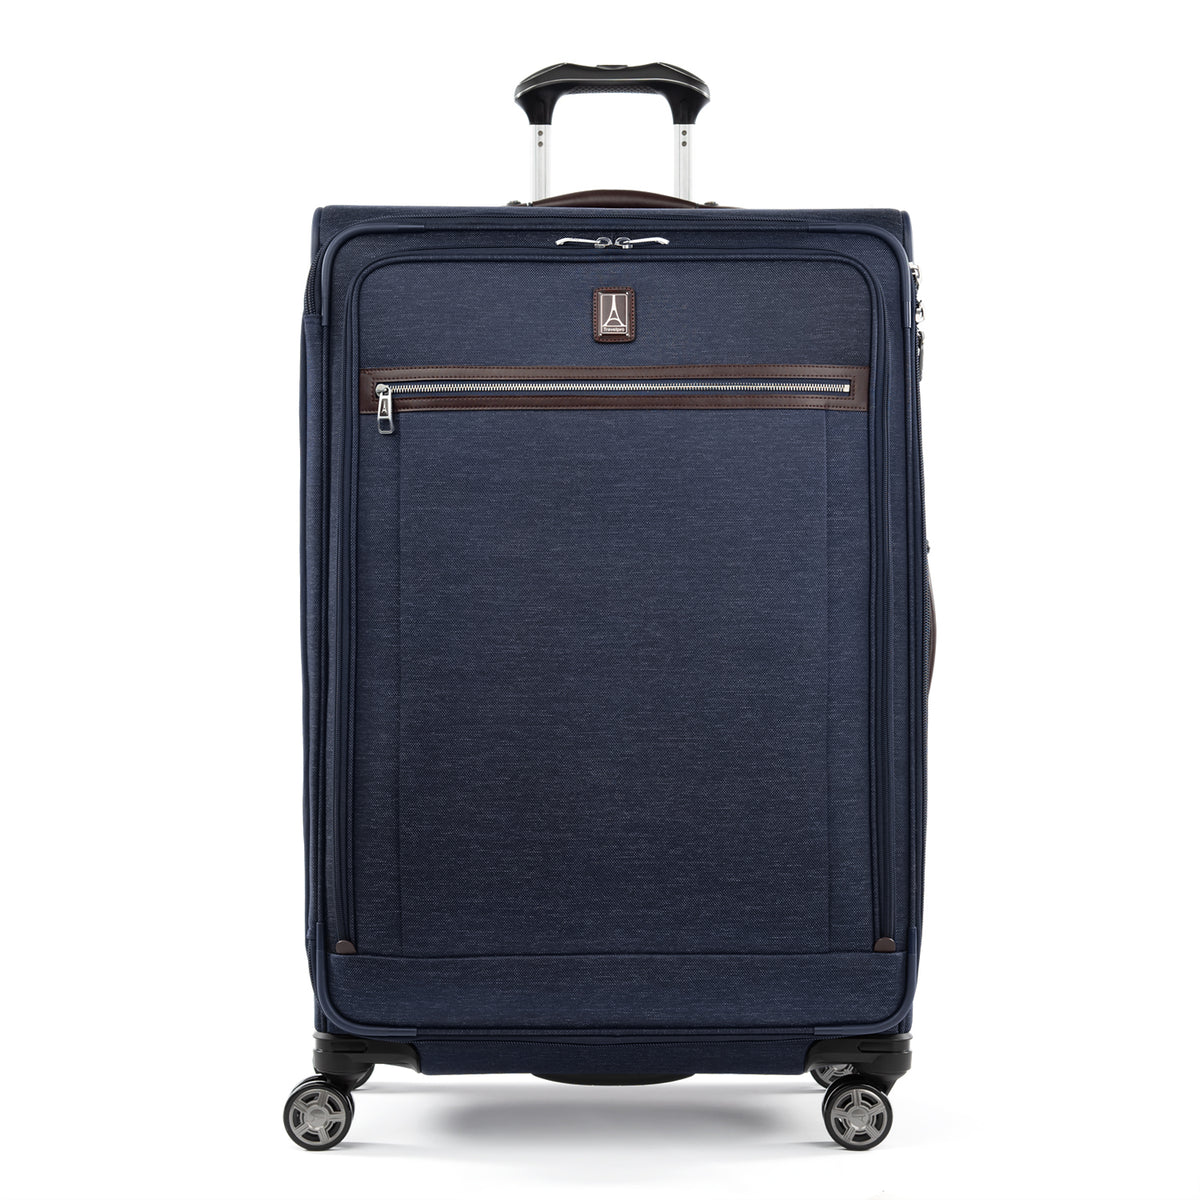 Travelpro Platinum Elite Softside Expandable Luggage, 8 Wheel Spinner Suitcase, USB Port, Suiter, Men and Women U5